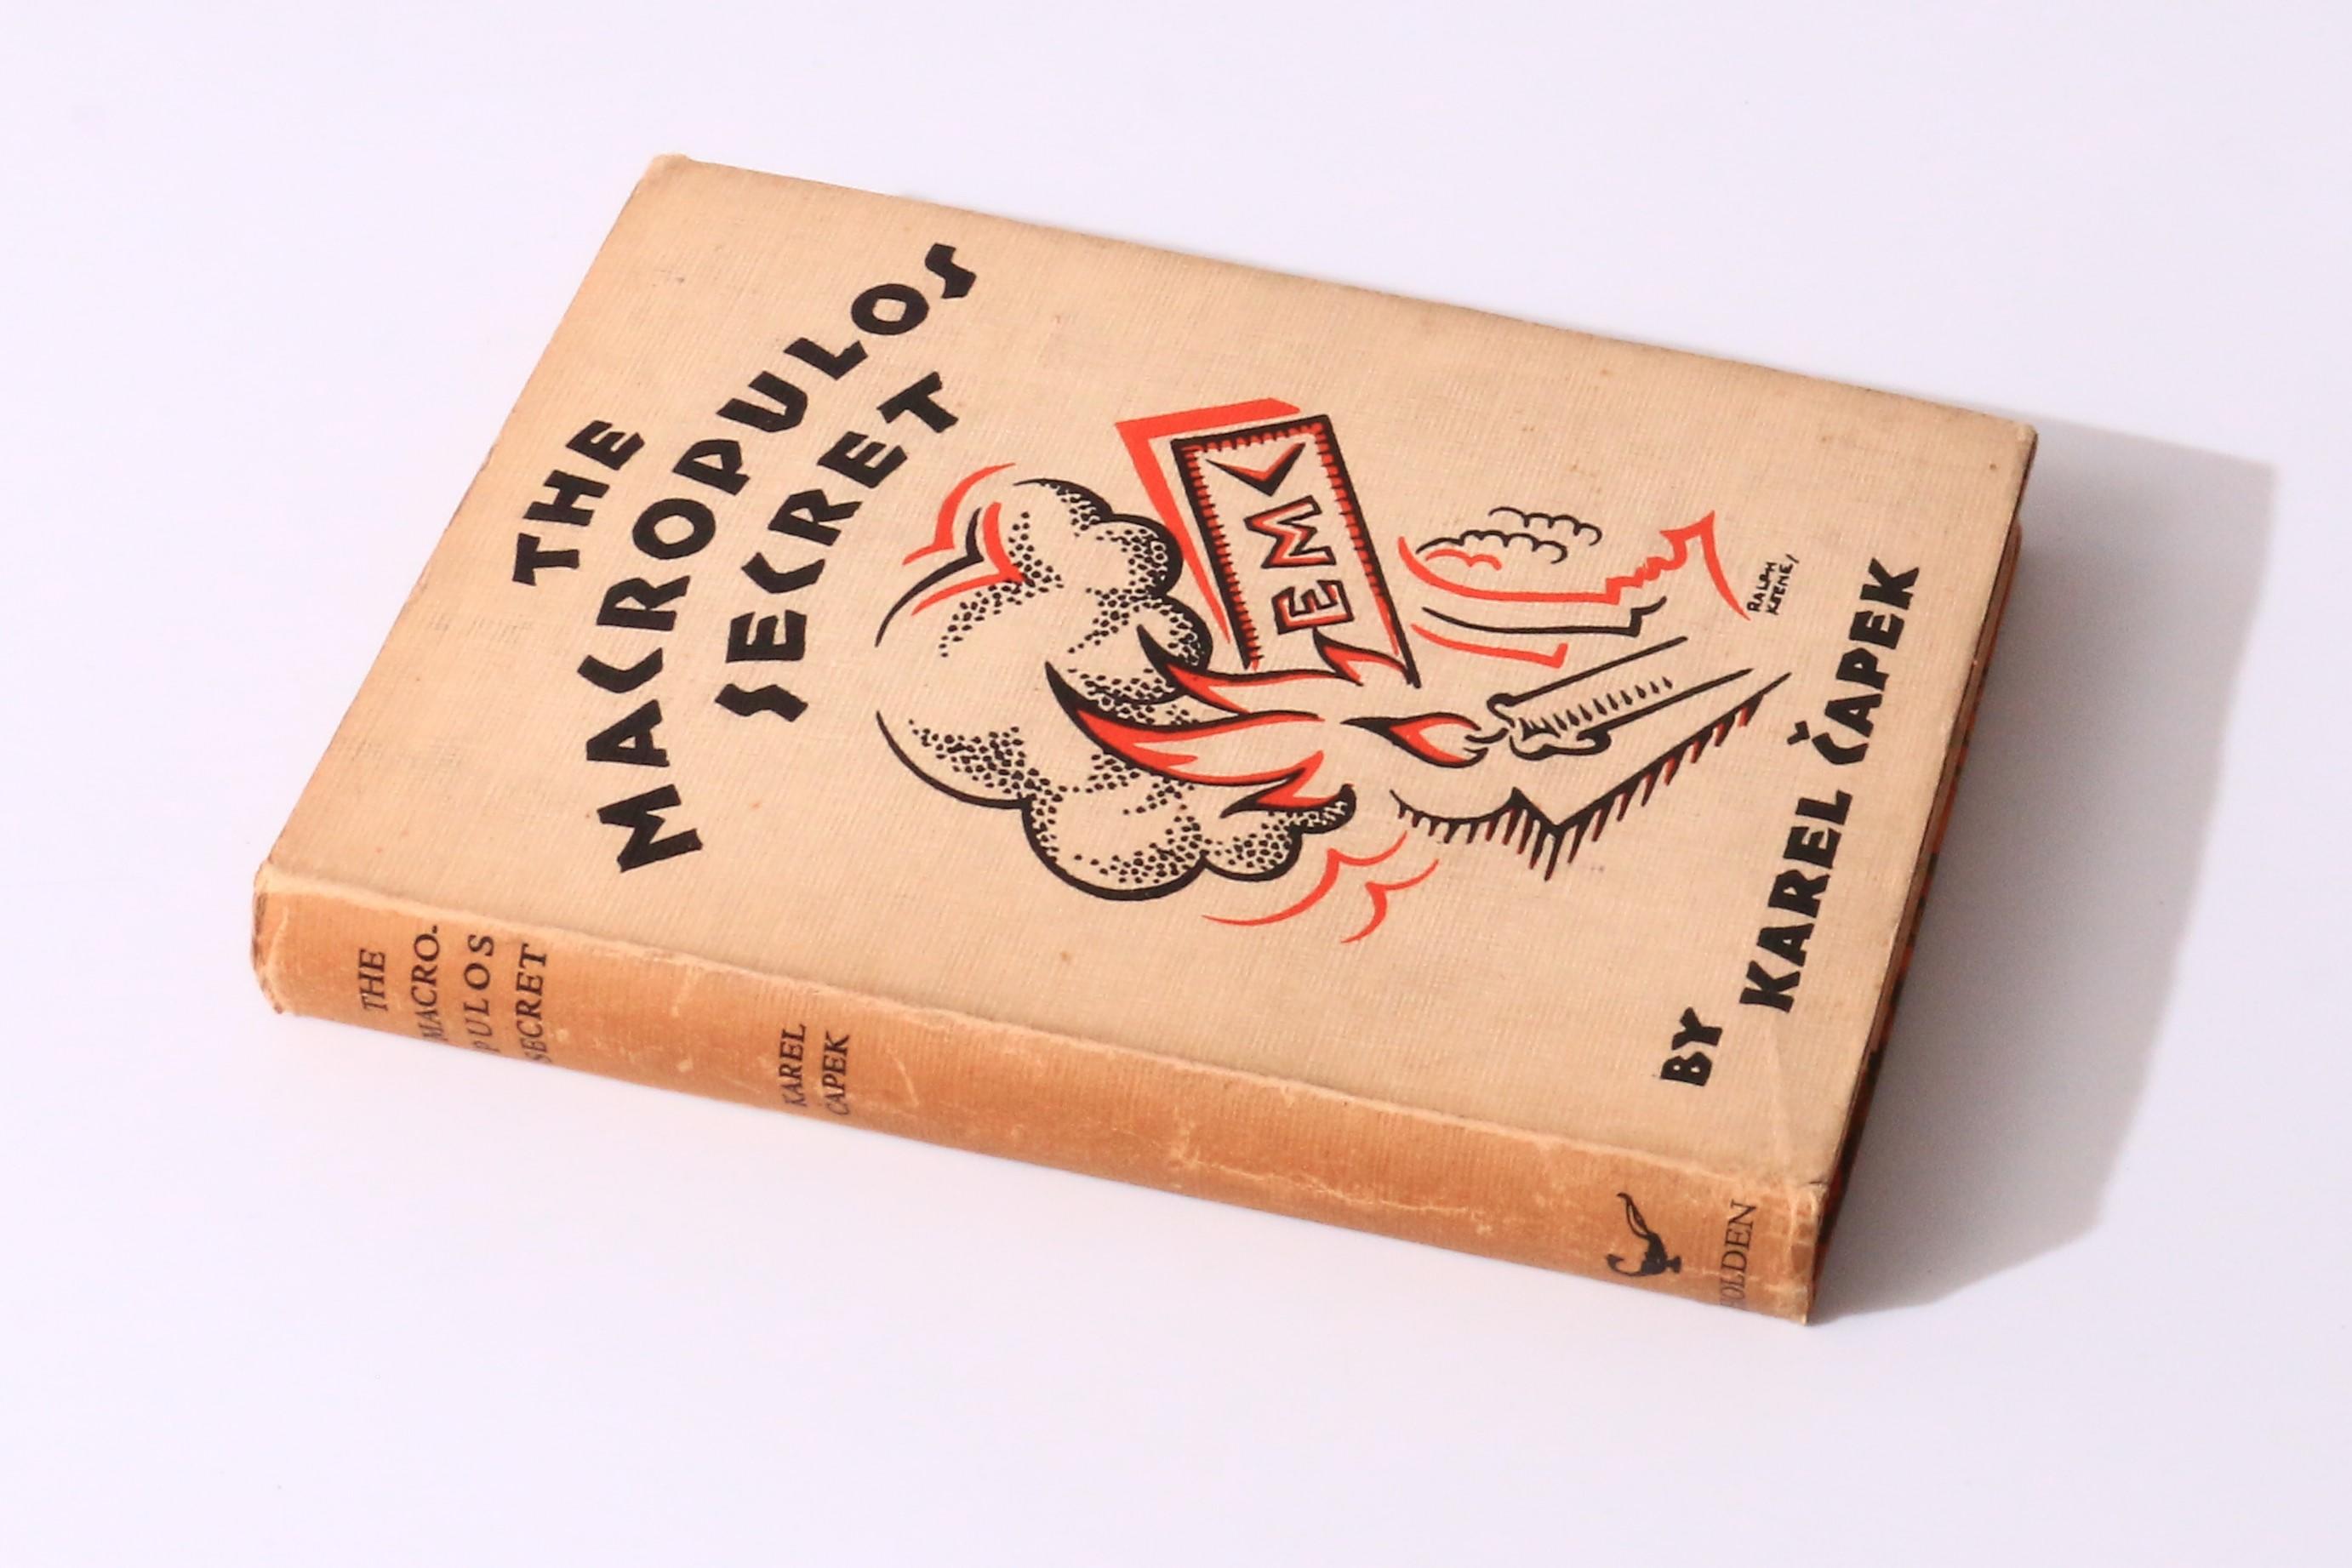 Karel Capek - The Macropulos Secret - Robert Holden, 1927, First Edition.